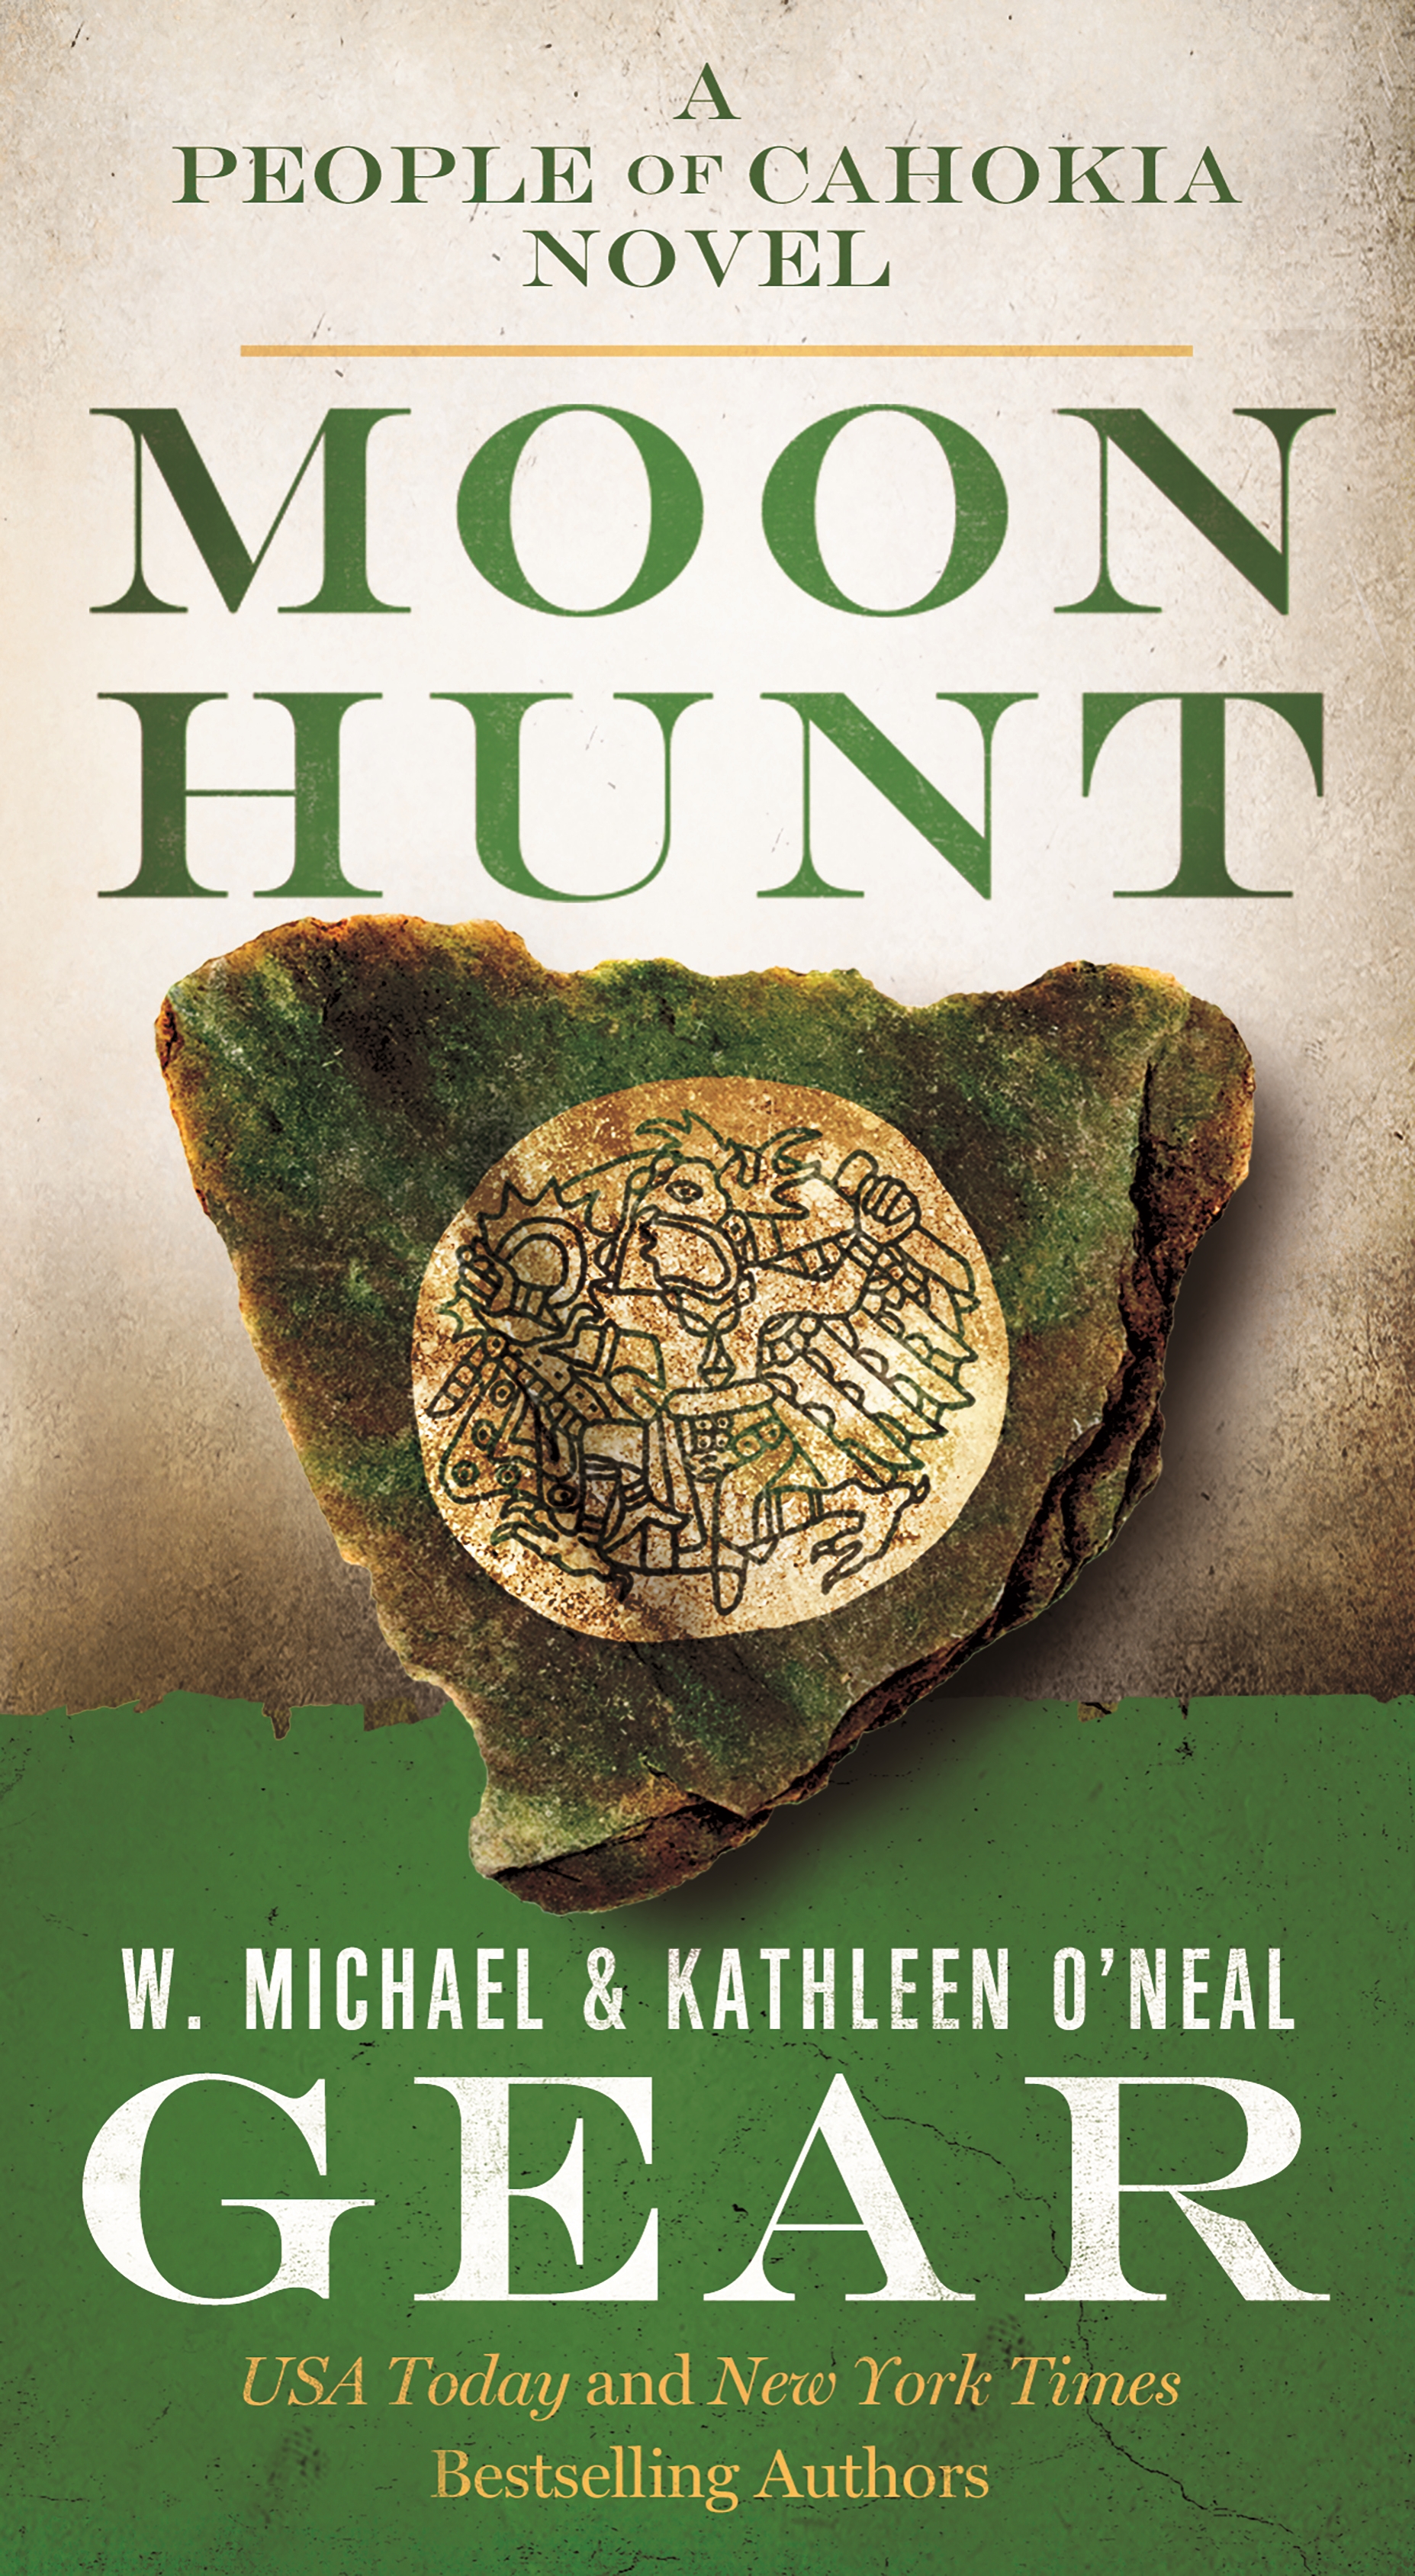 Moon Hunt : People of Cahokia by W. Michael Gear, Kathleen O'Neal Gear